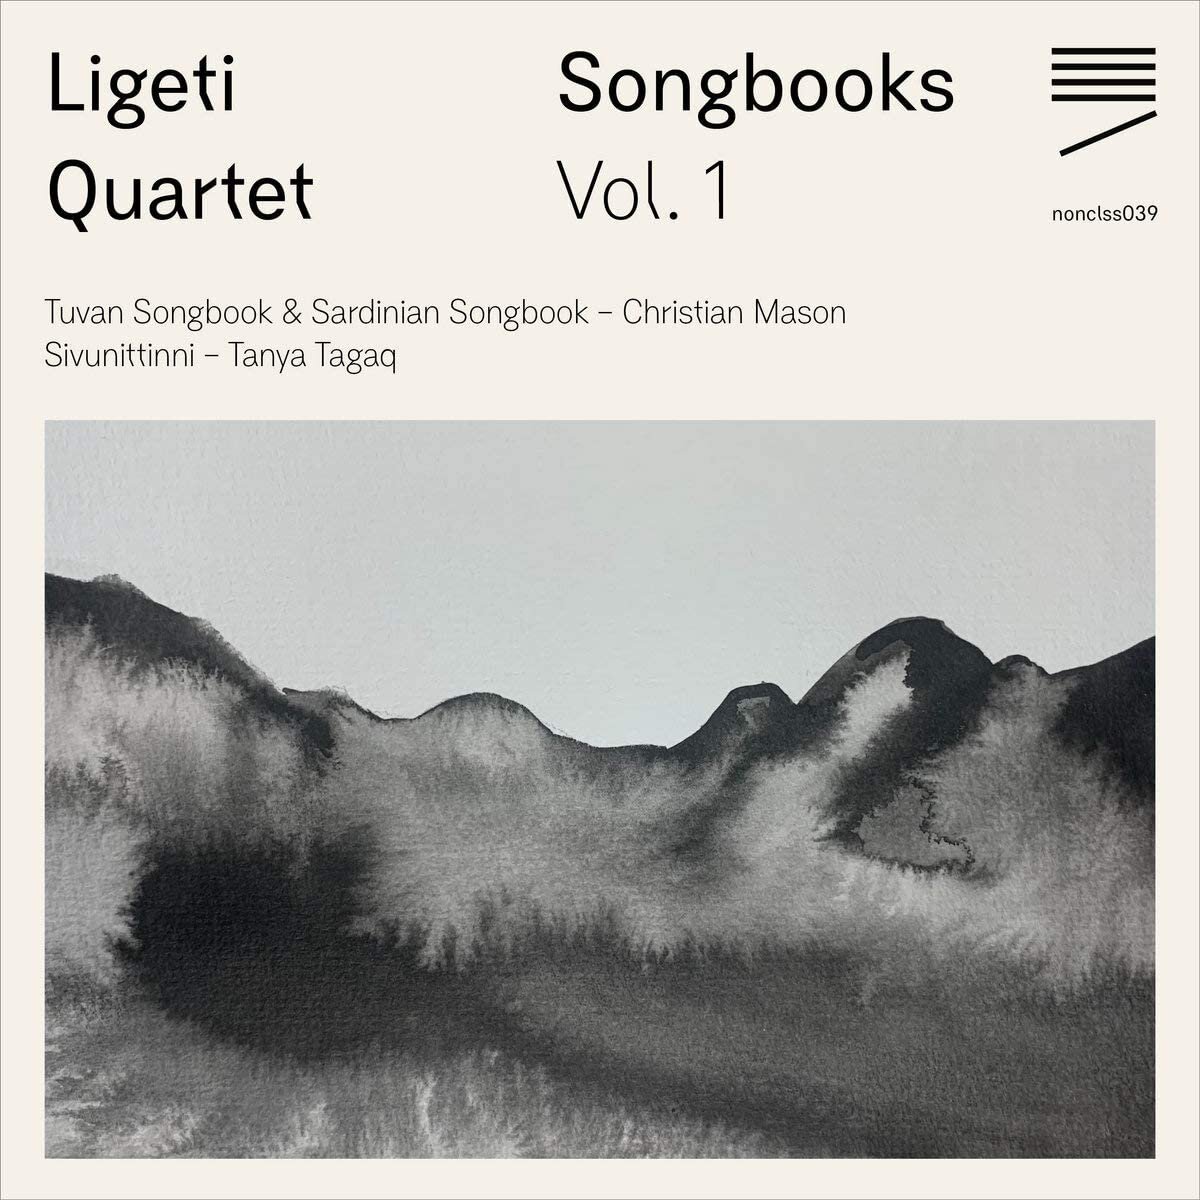 Sardinian Songbooks Vol 1 - Ligeti Quartet.jpg